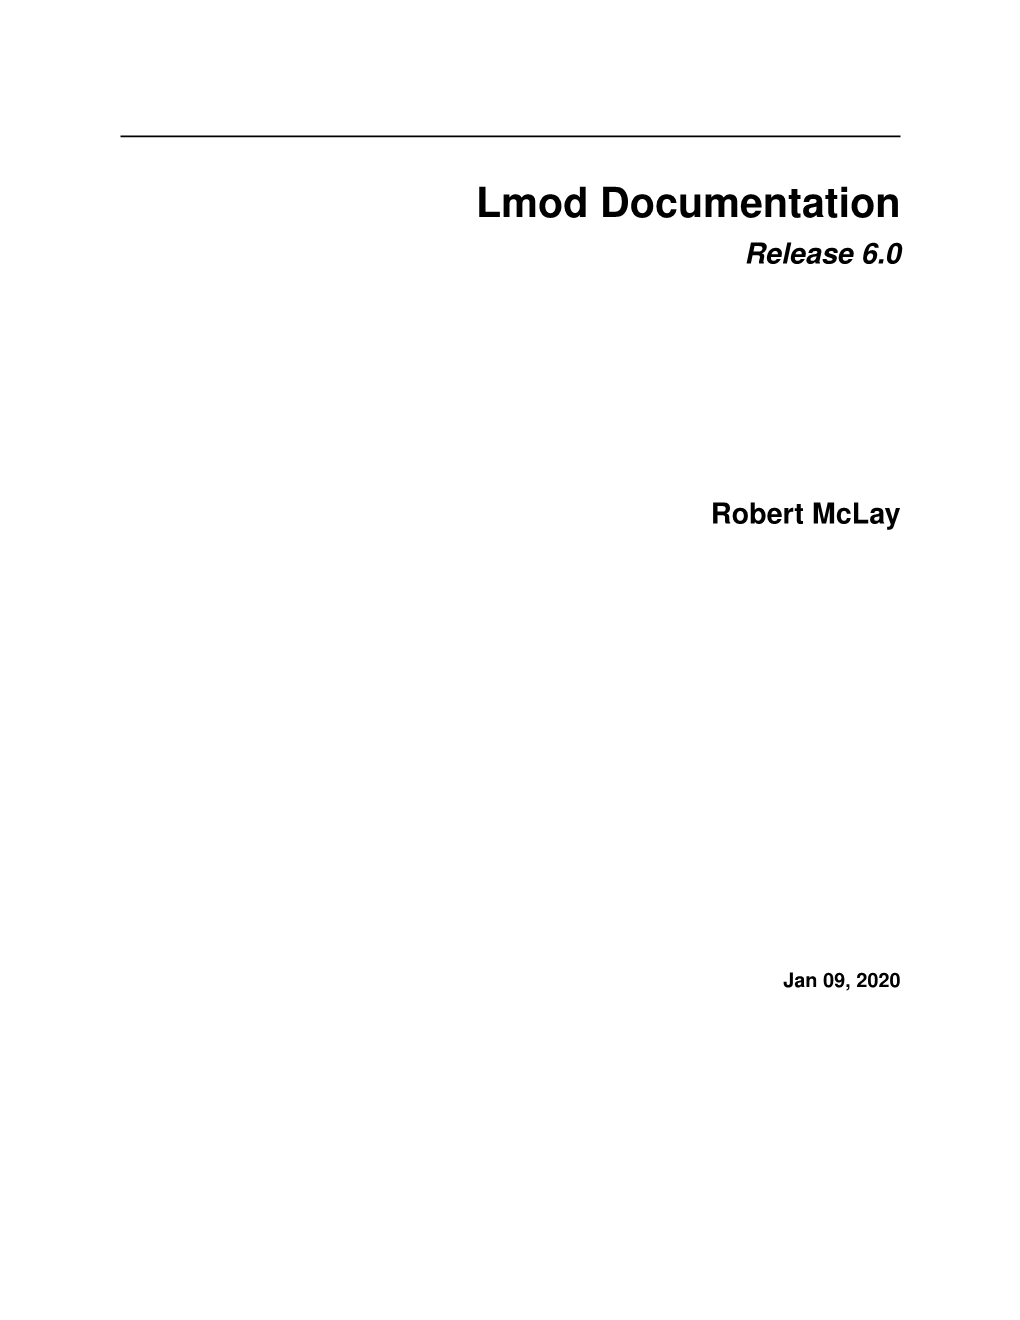 Lmod Documentation Release 6.0